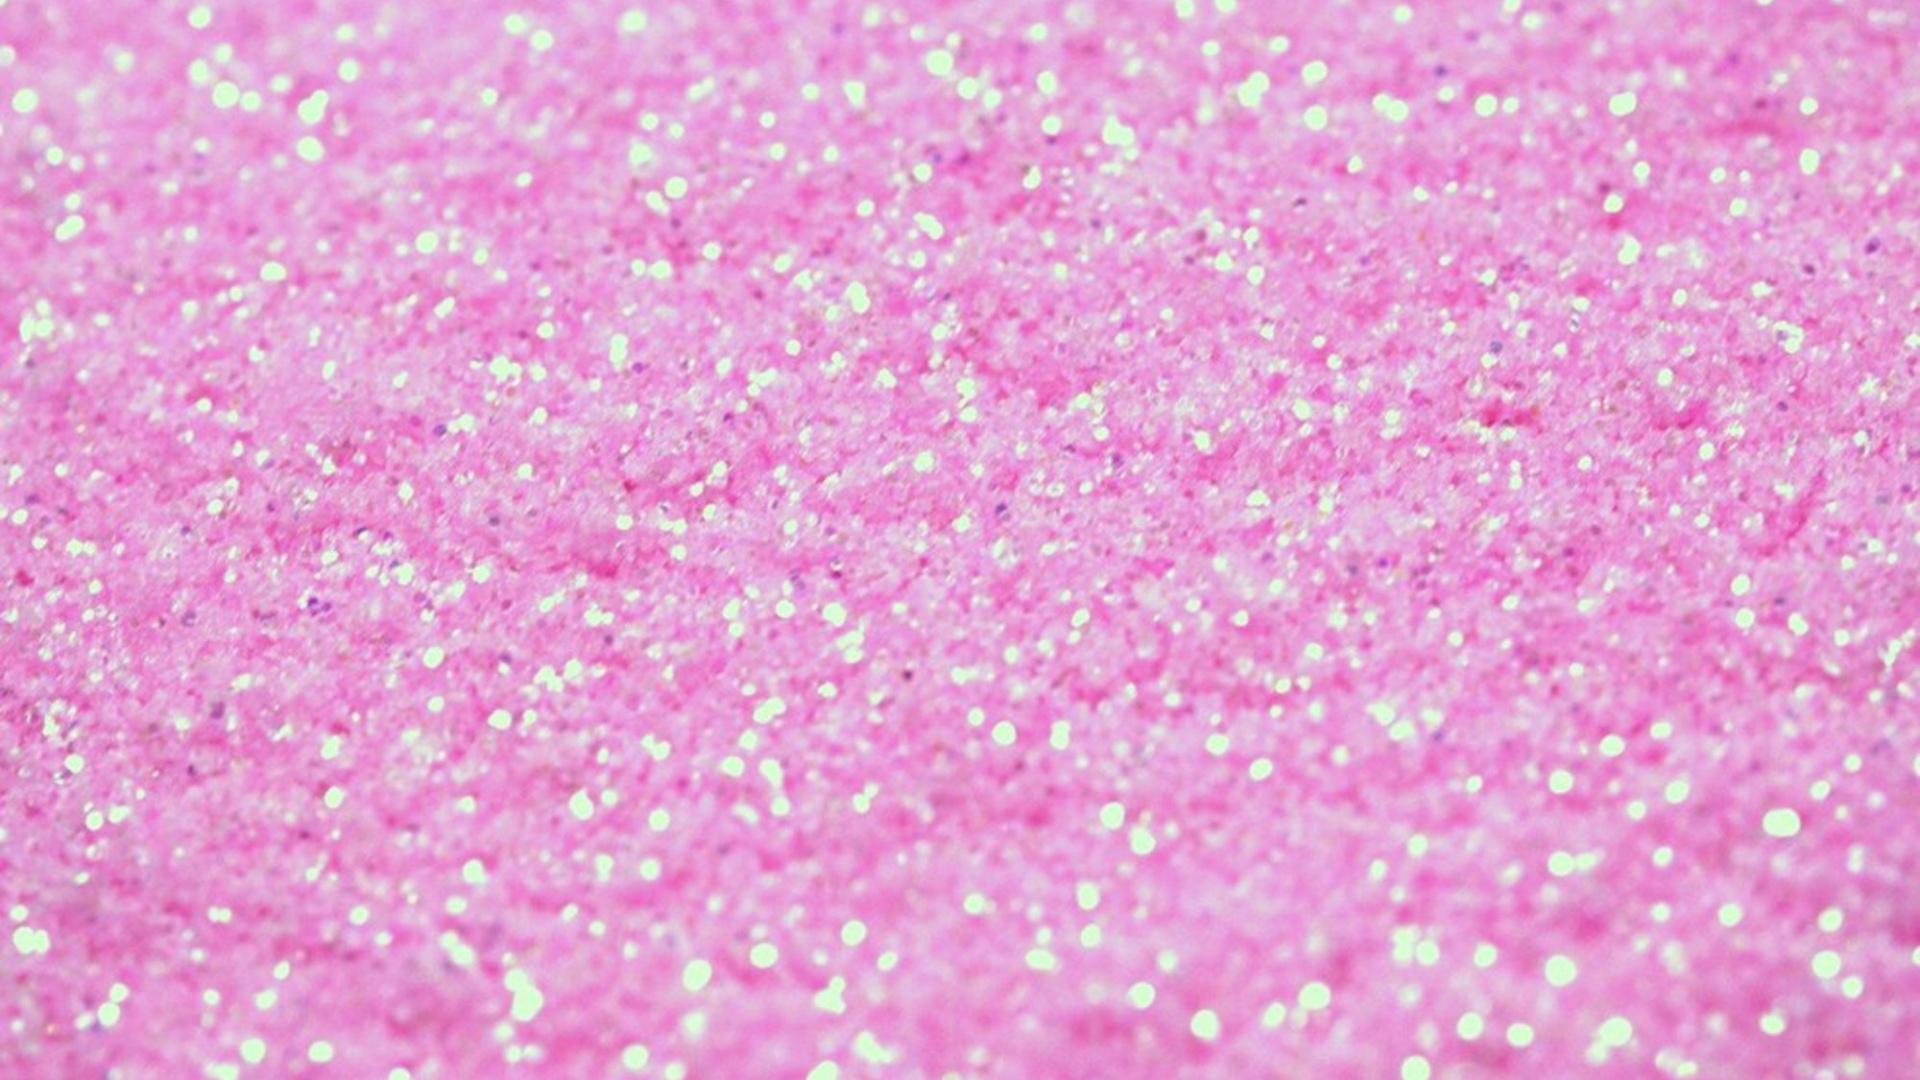 500+] Glitter Wallpapers | Wallpapers.com